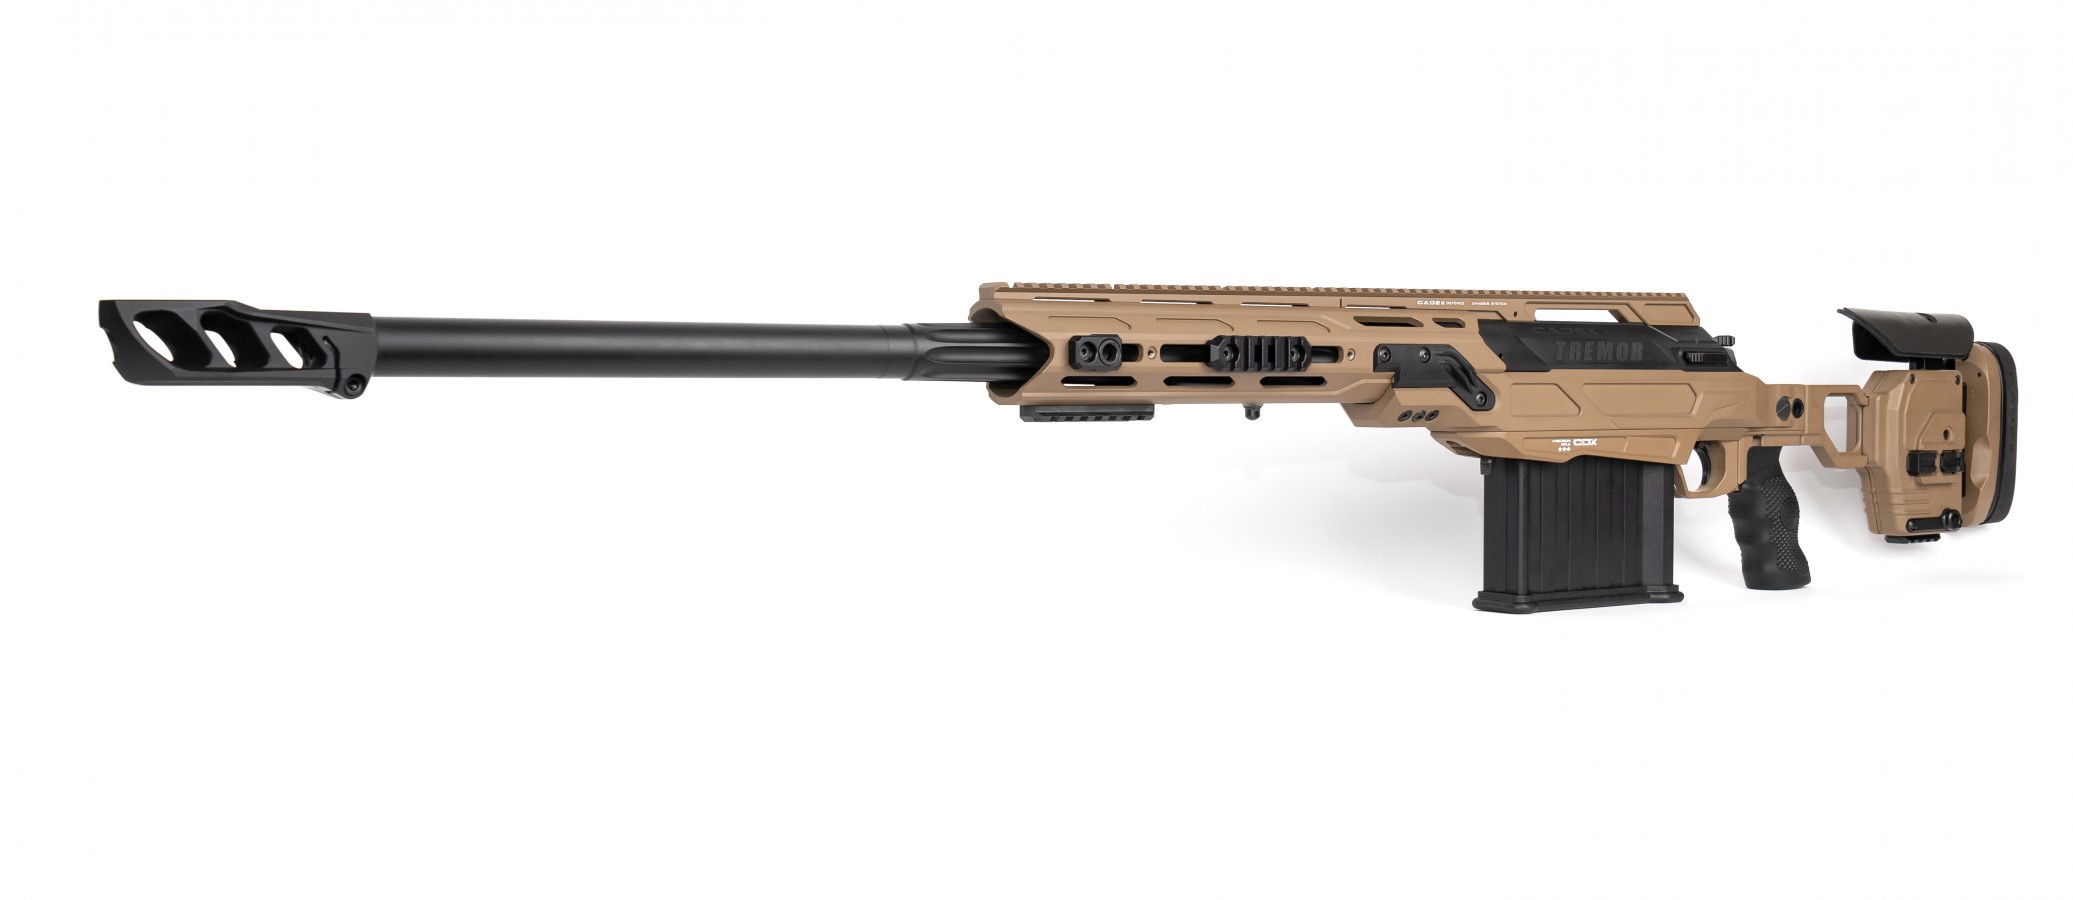 Suppressed Cadex Defense CDX- 50 TREMOR .50 BMG rifle : r